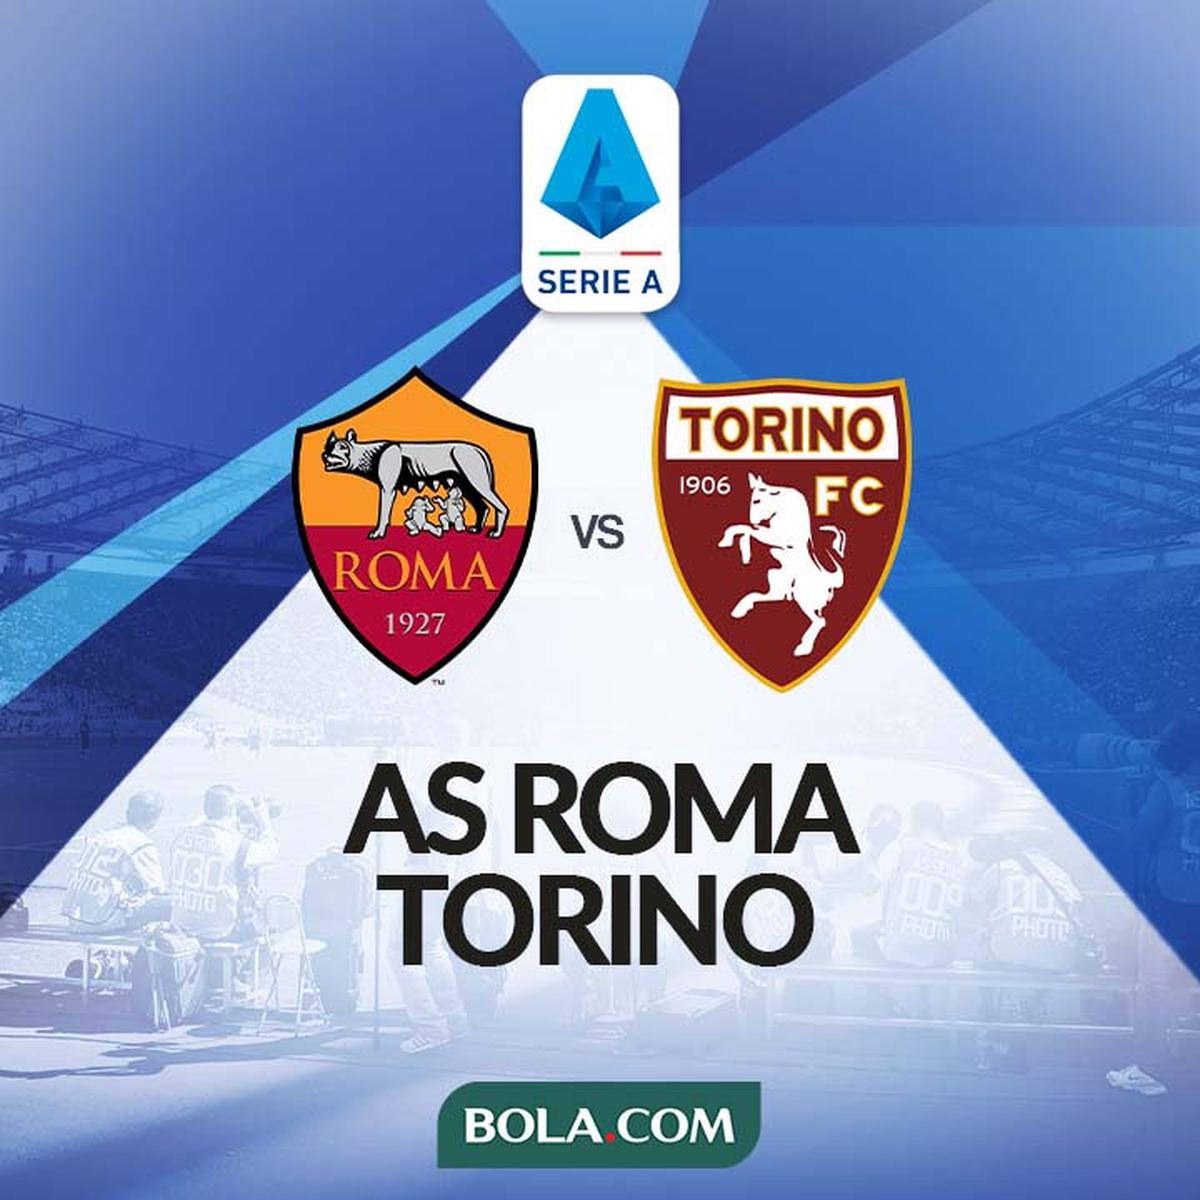 Roma vs Torino